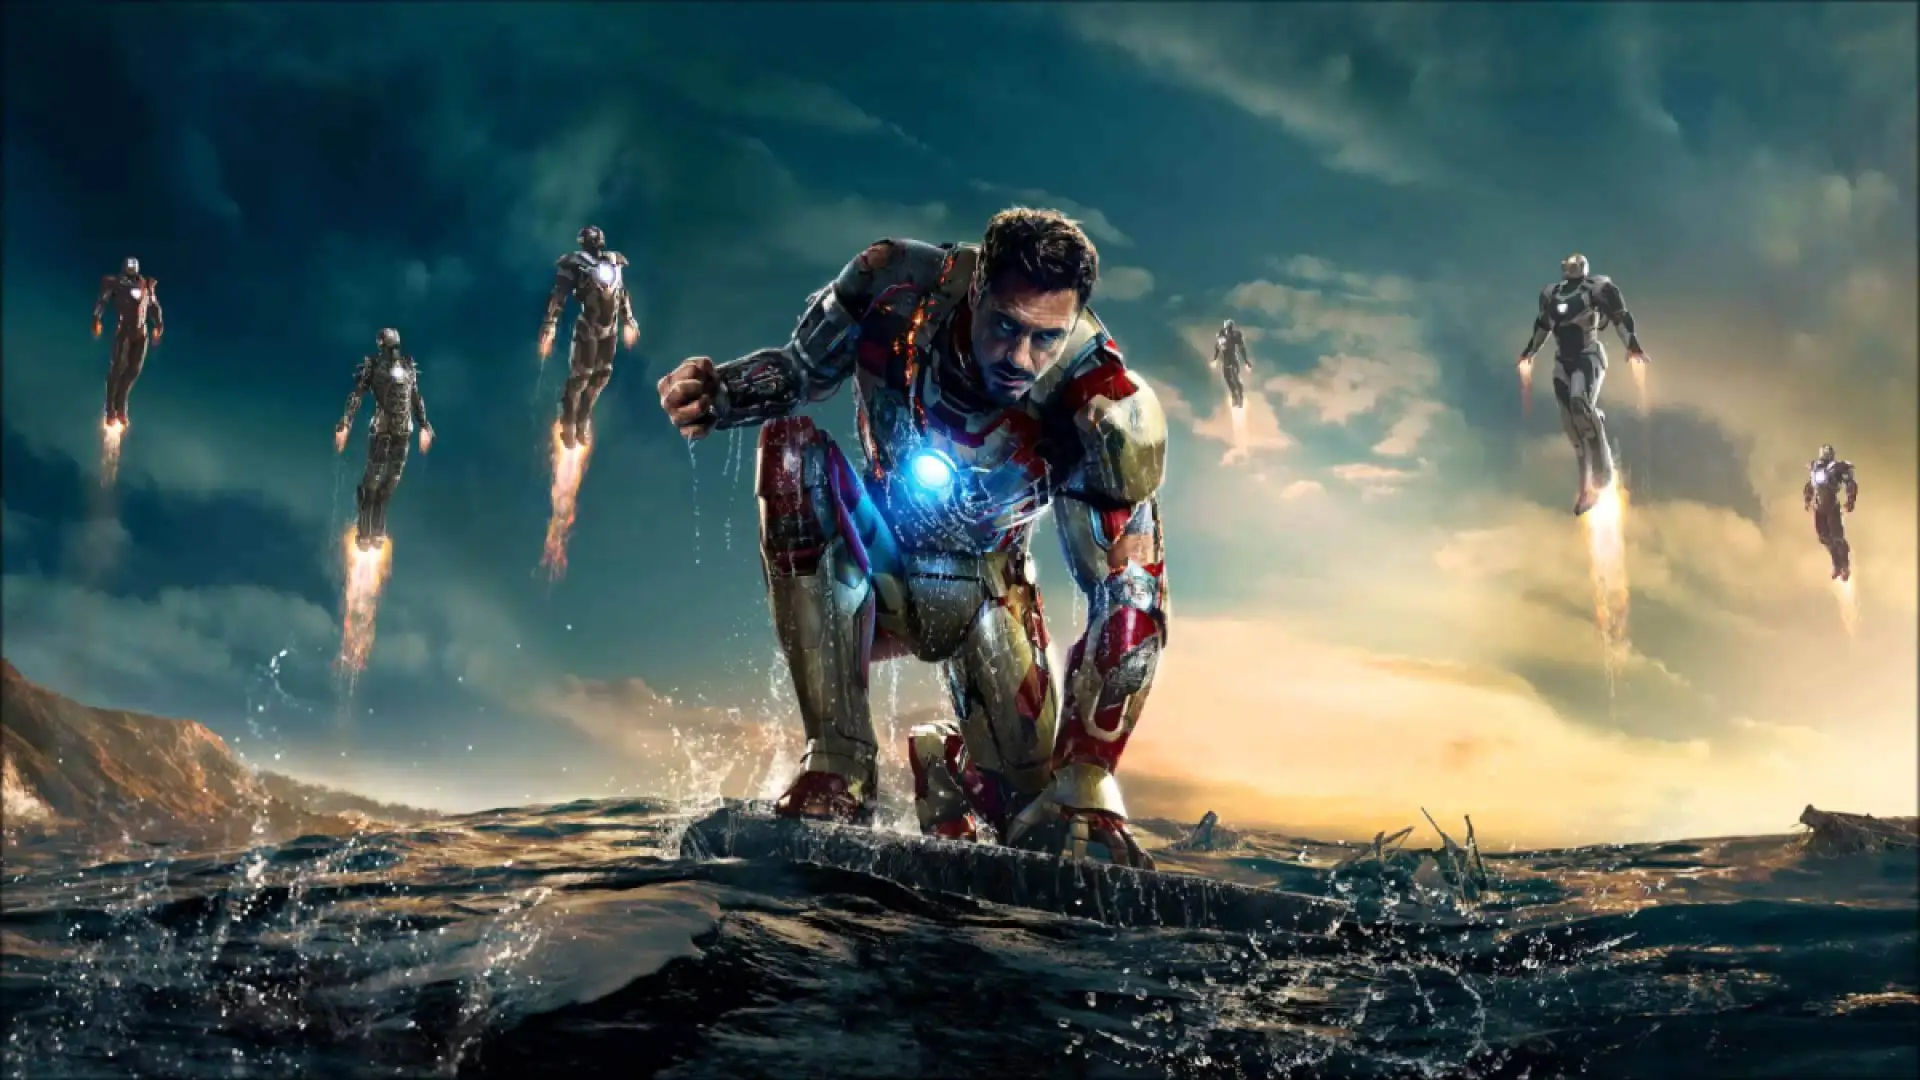 Robert Downey Jr. as Iron Man in Iron Man 3